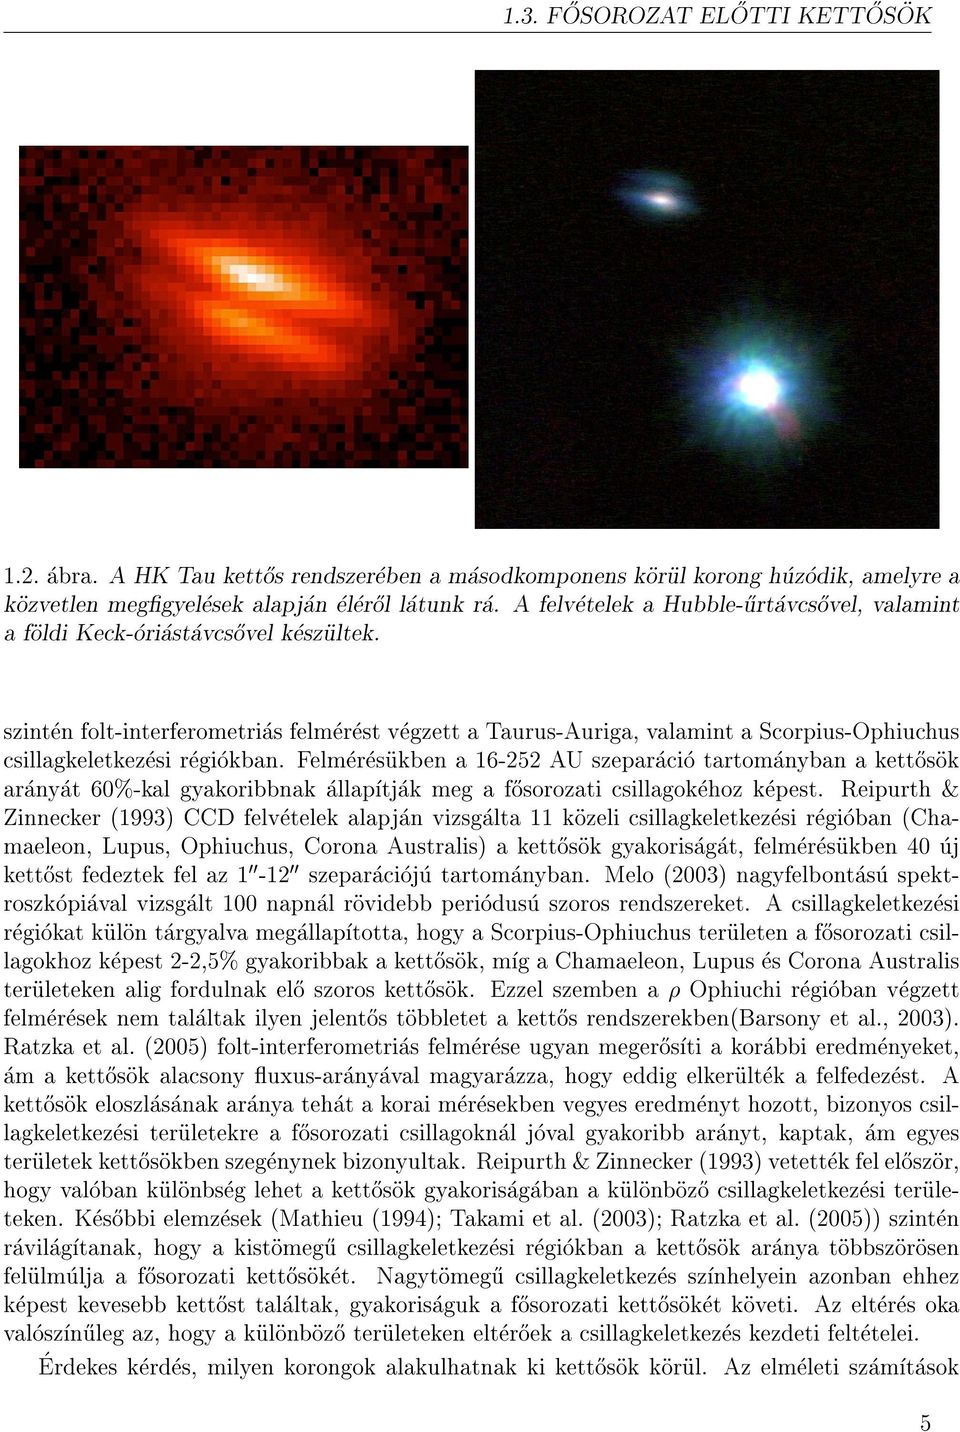 szinten folt-interferometrias felmerest vegzett a Taurus-Auriga, valamint a Scorpius-Ophiuchus csillagkeletkezesi regiokban.